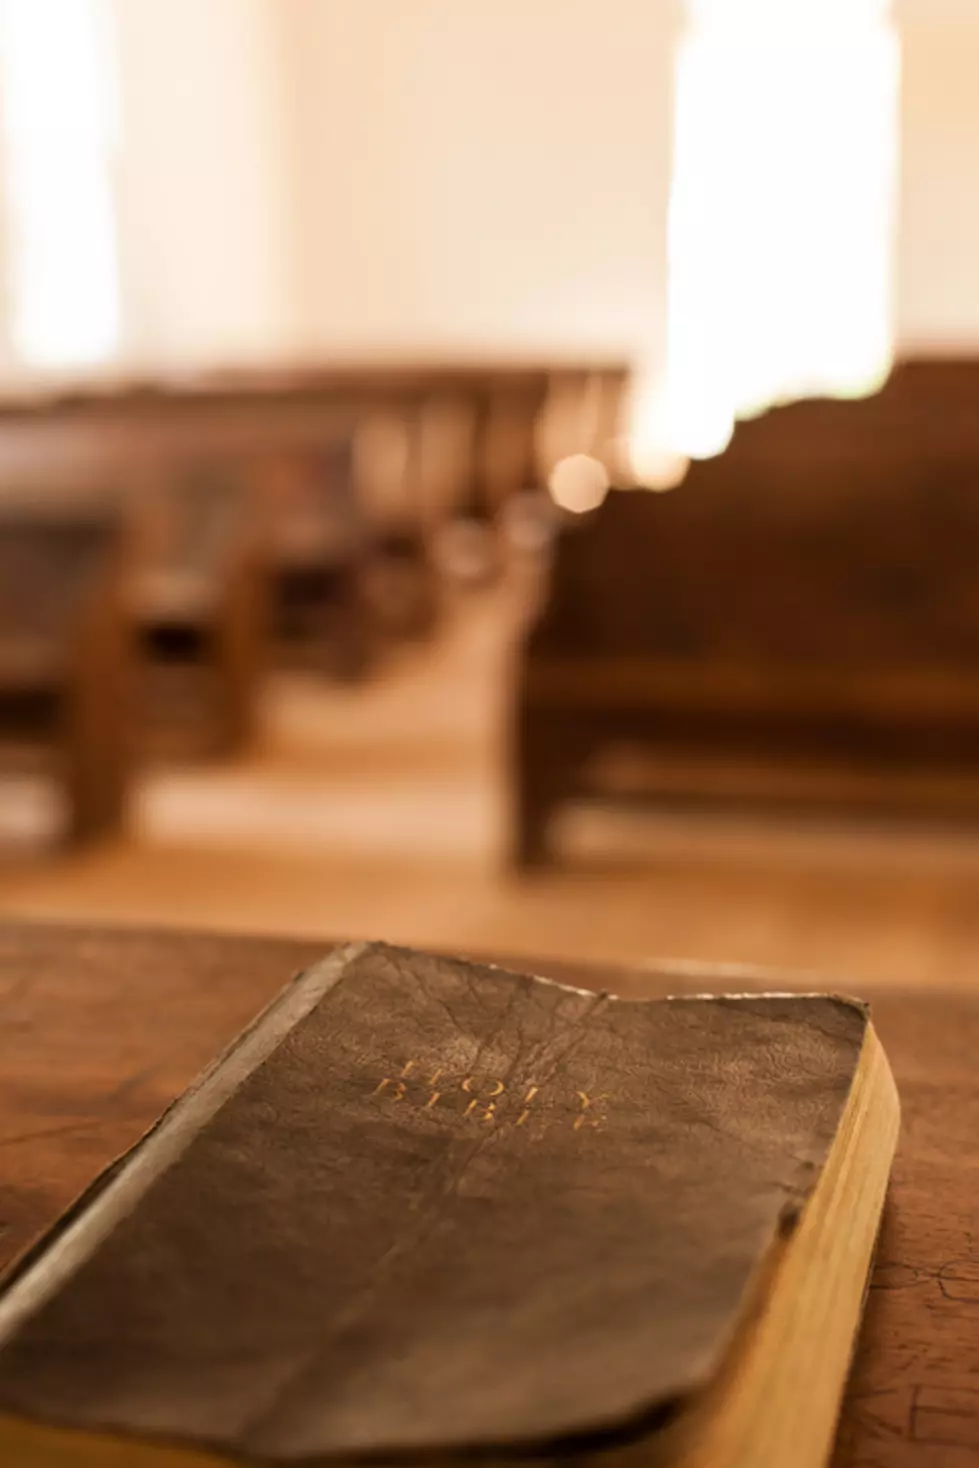 Sex Abuse Crisis Tops Agenda as Southern Baptists Convene